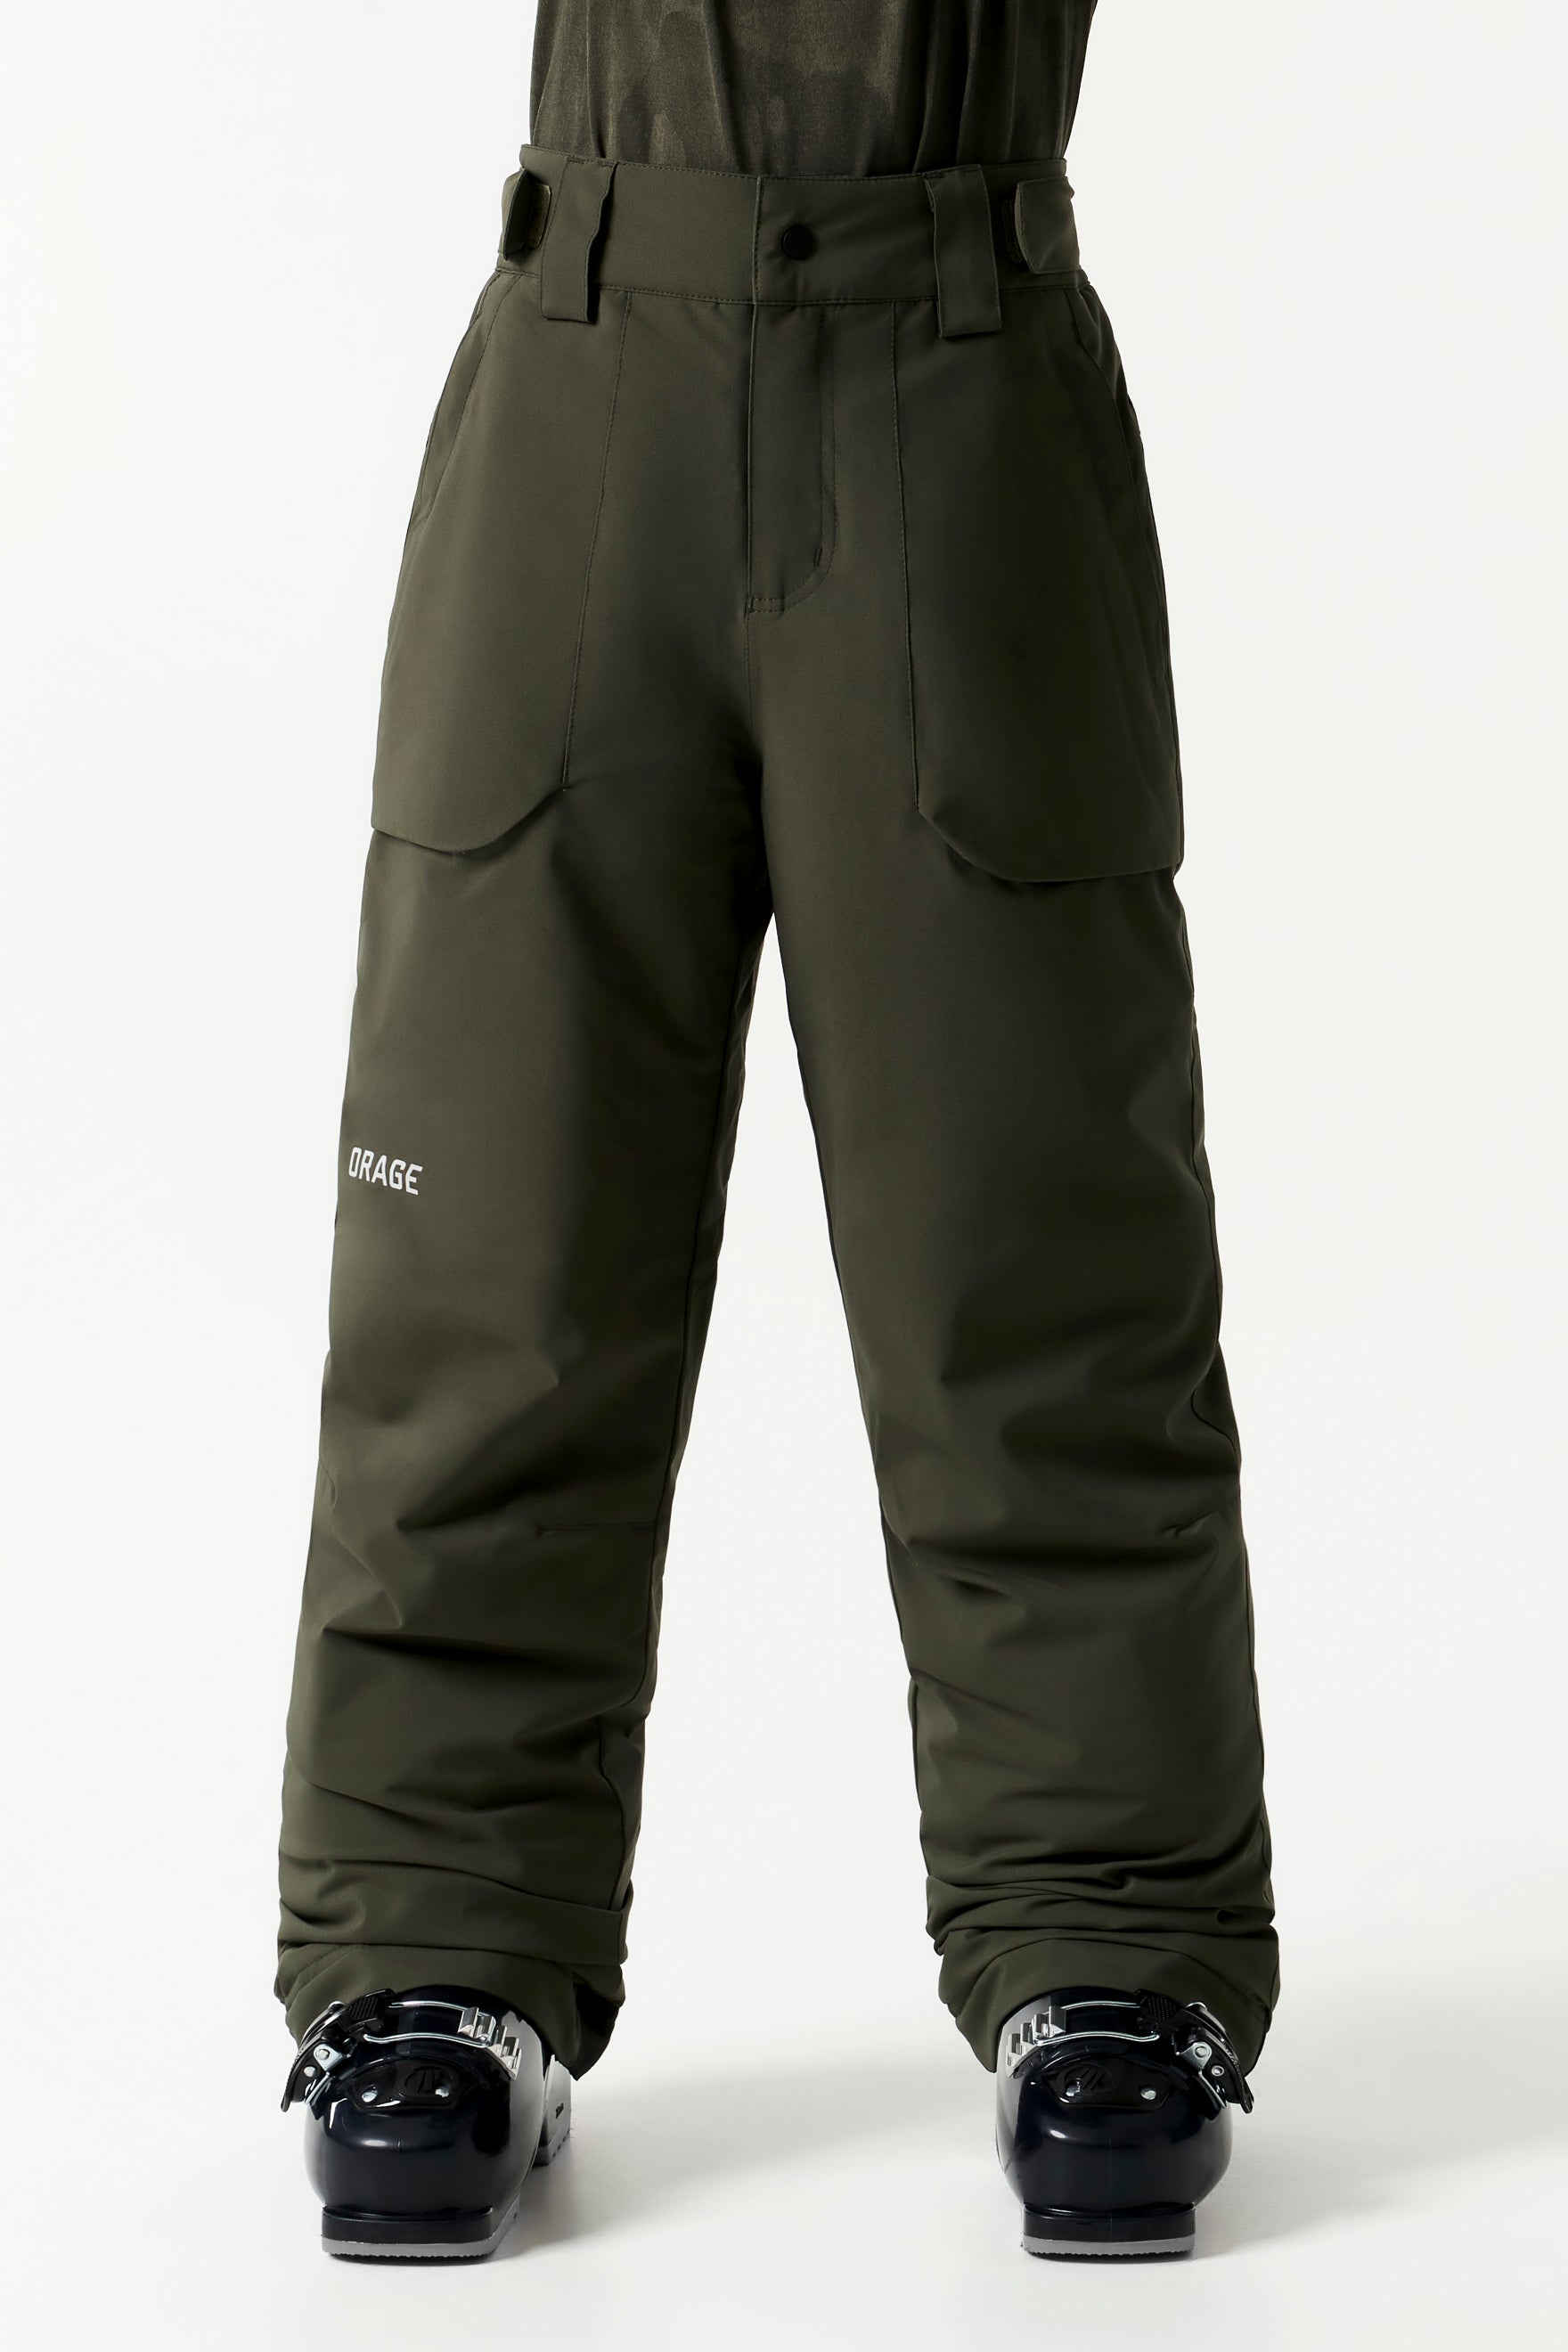 Orage Prime 10 Ski Snowboard Pants Men's Small Insulated